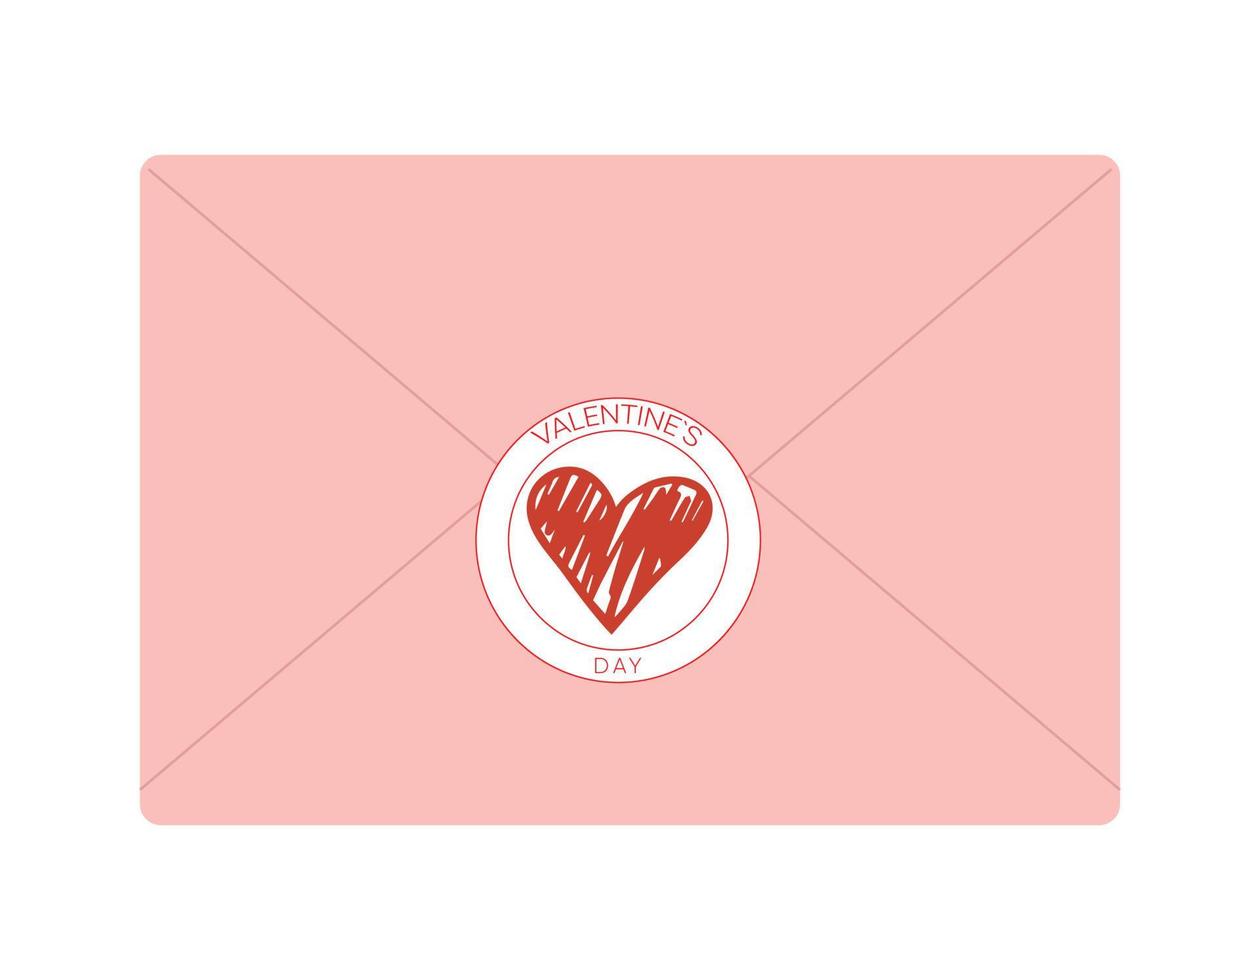 Pink envelope with doodle heart. Vector illustration